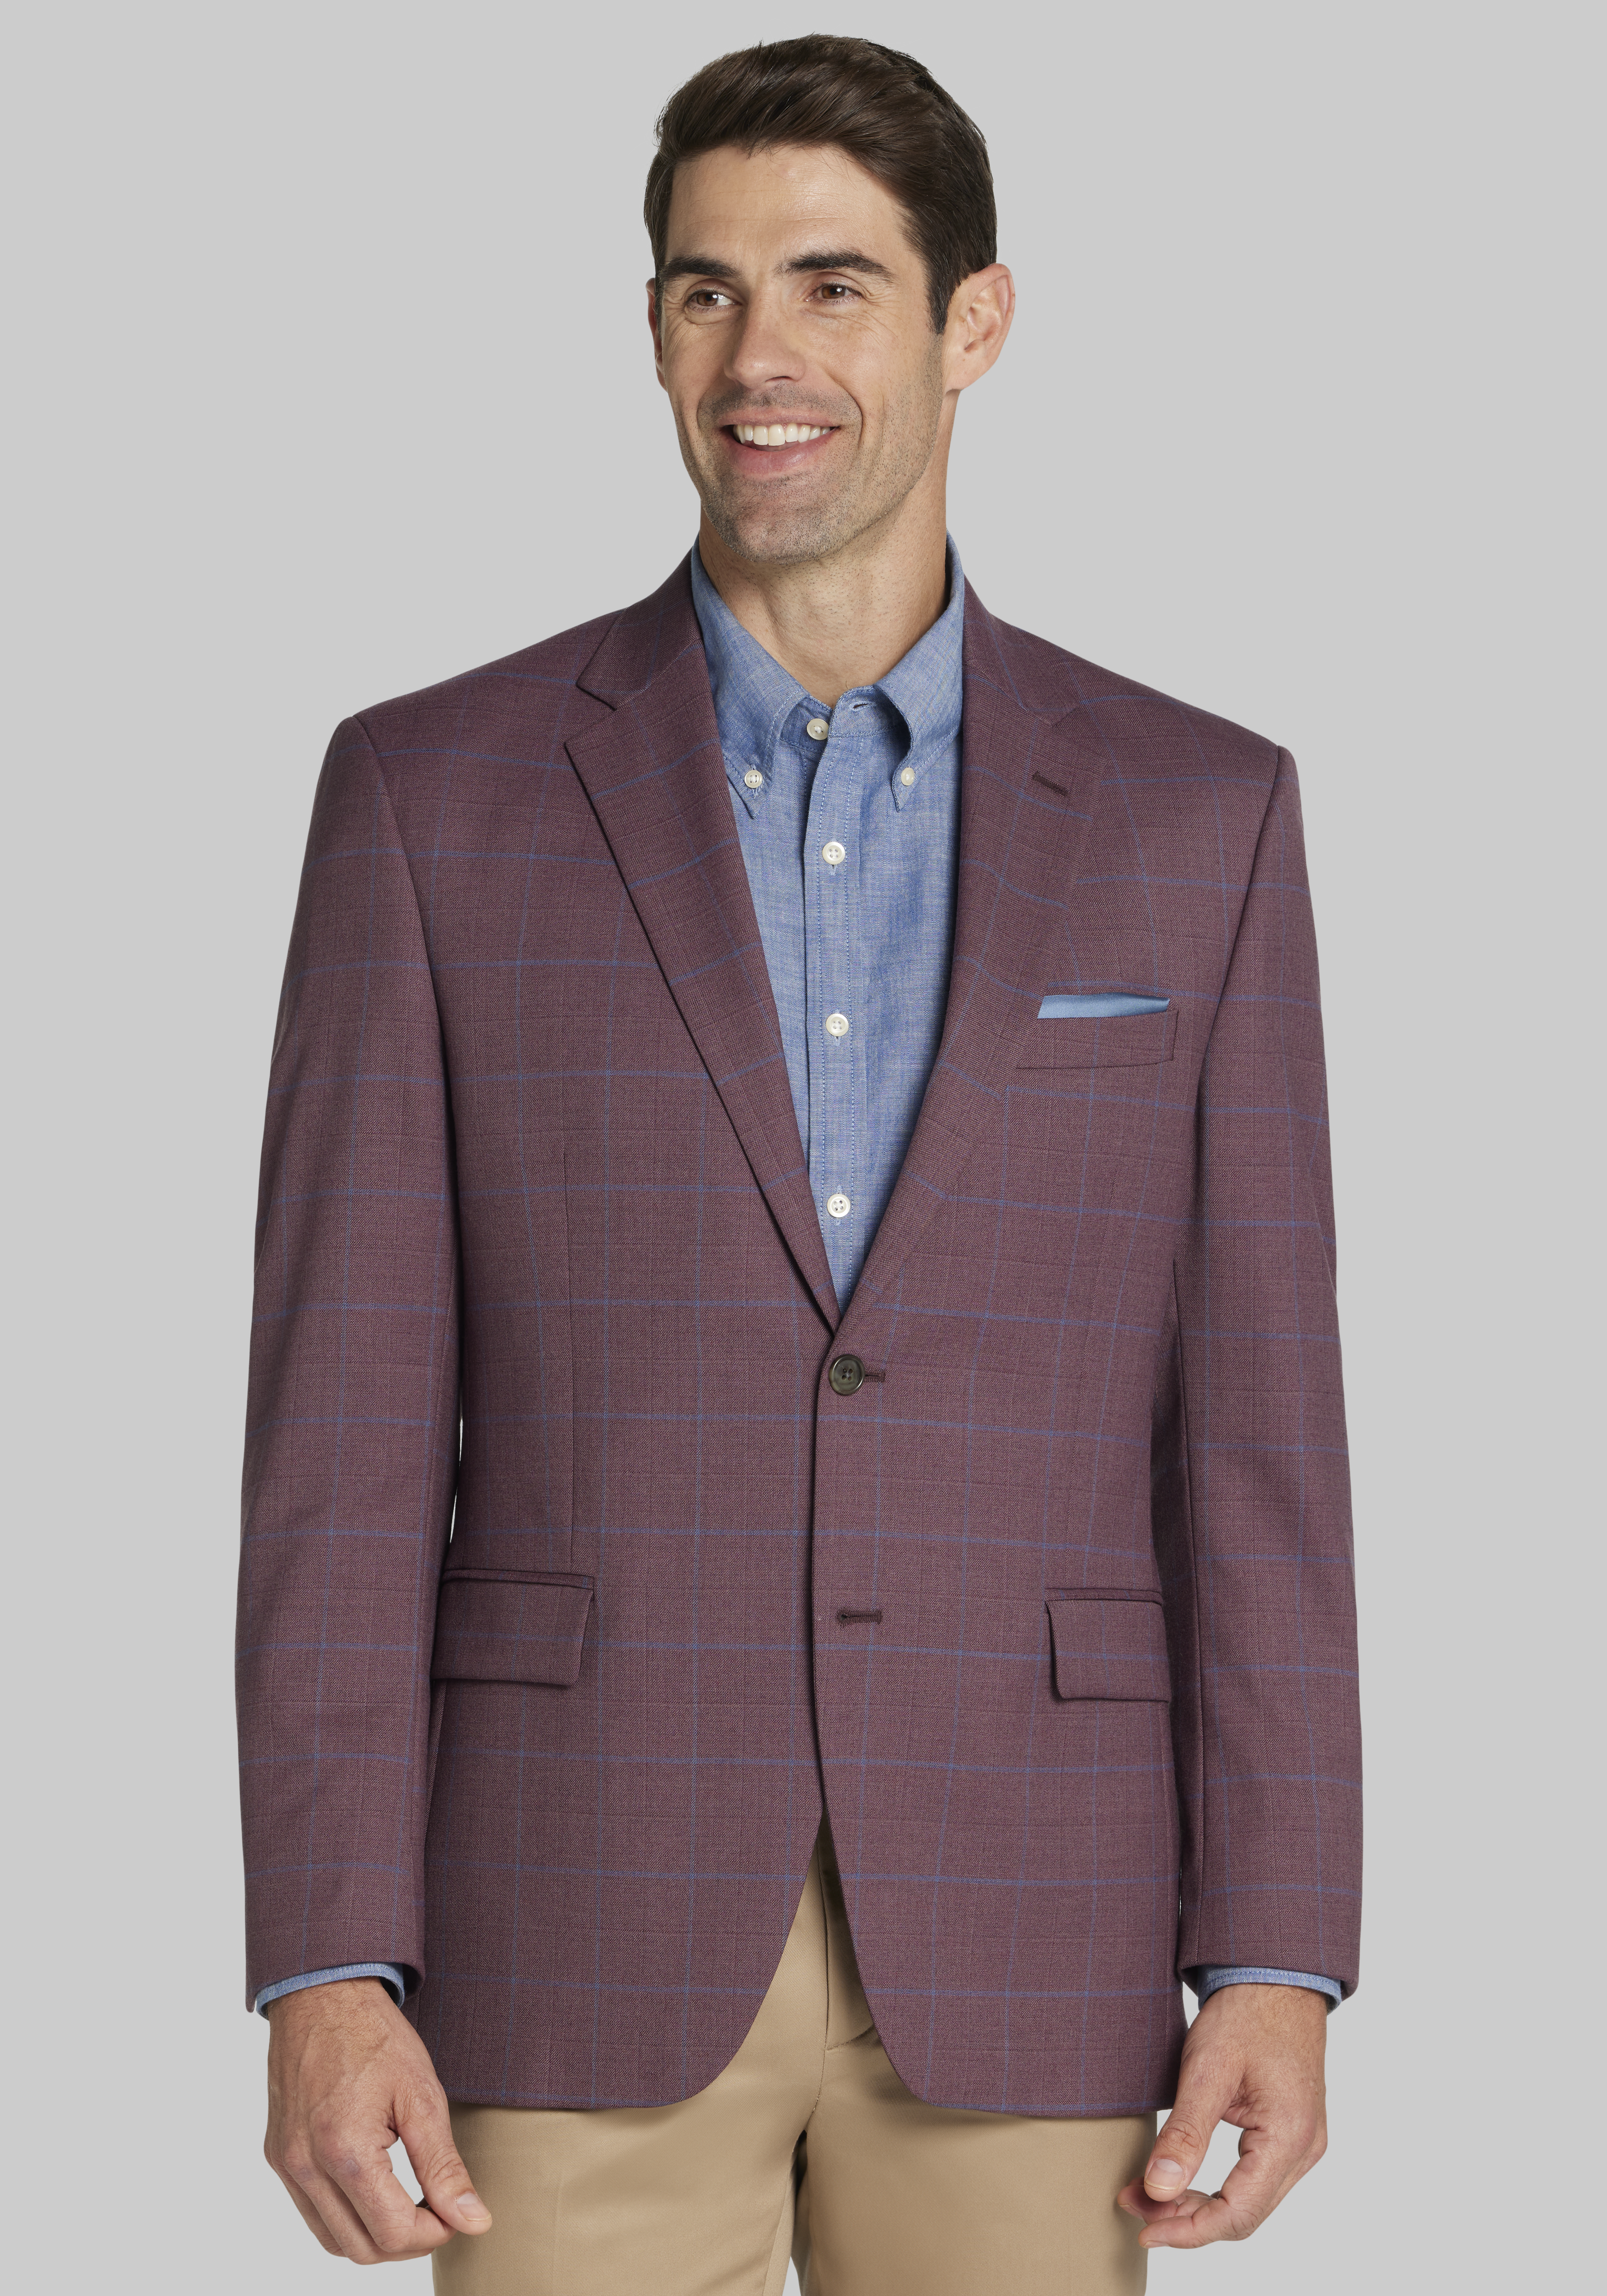 Slim Fit Suit Suede Blazer Jacket Sport Coat  Velvet suit jacket, Suede  blazer, Mens fashion business casual